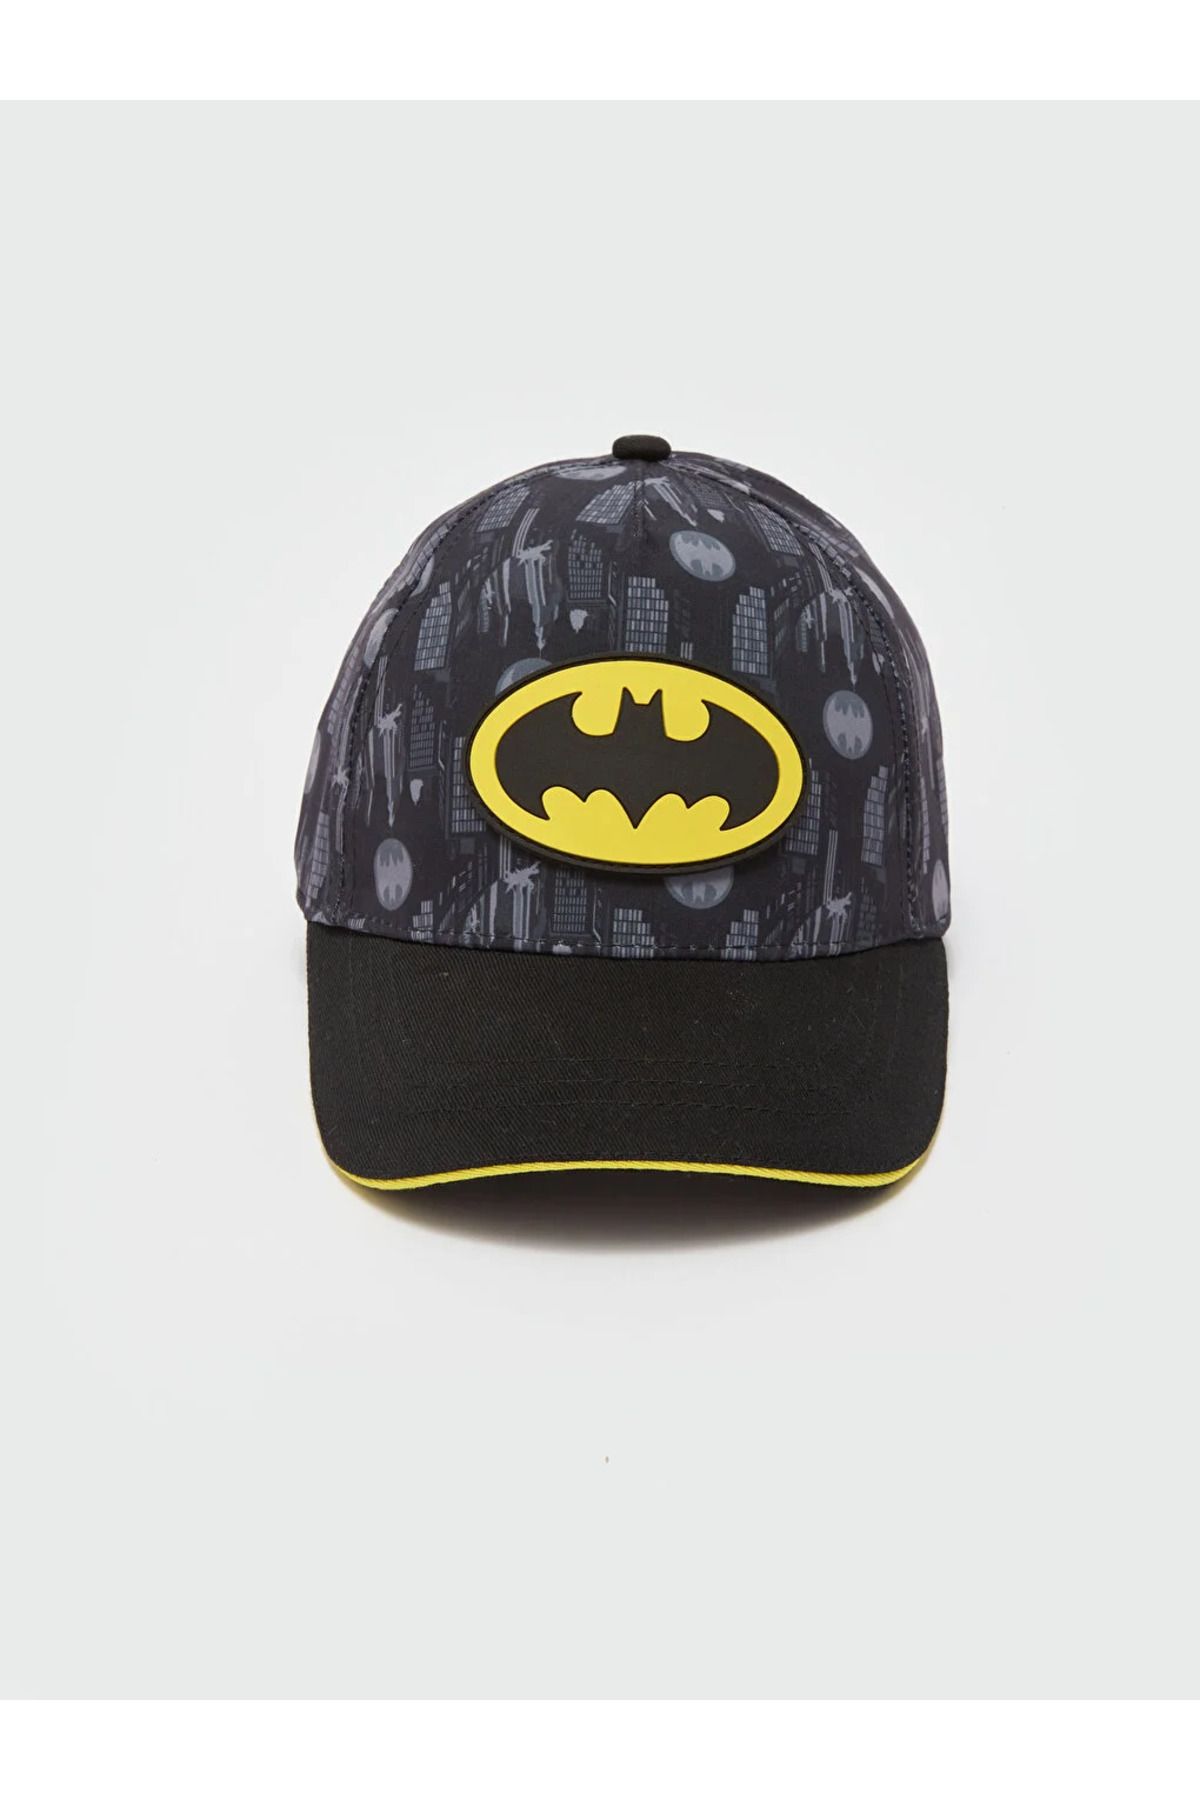 LC Waikiki LCW ACCESSORIES Batman Baskılı Erkek Çocuk Kep Şapka